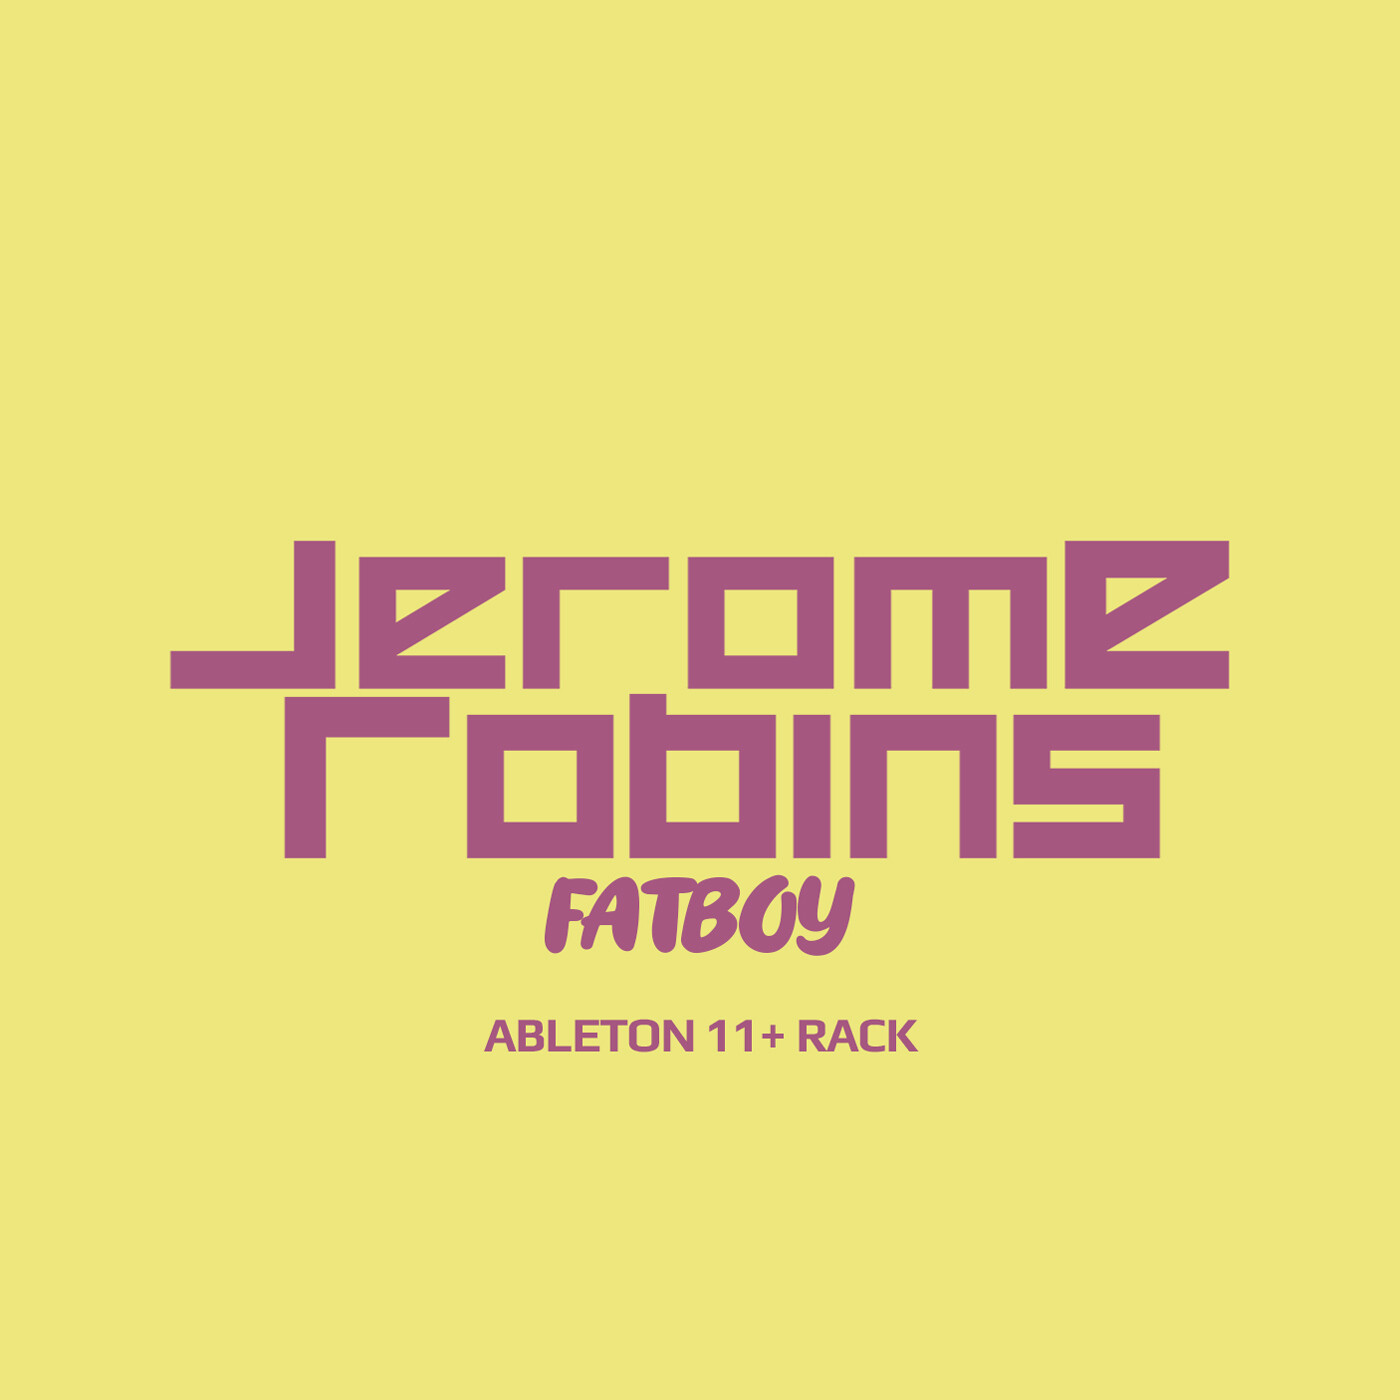 Jerome Robins Fatboy Ableton 11+ Rack